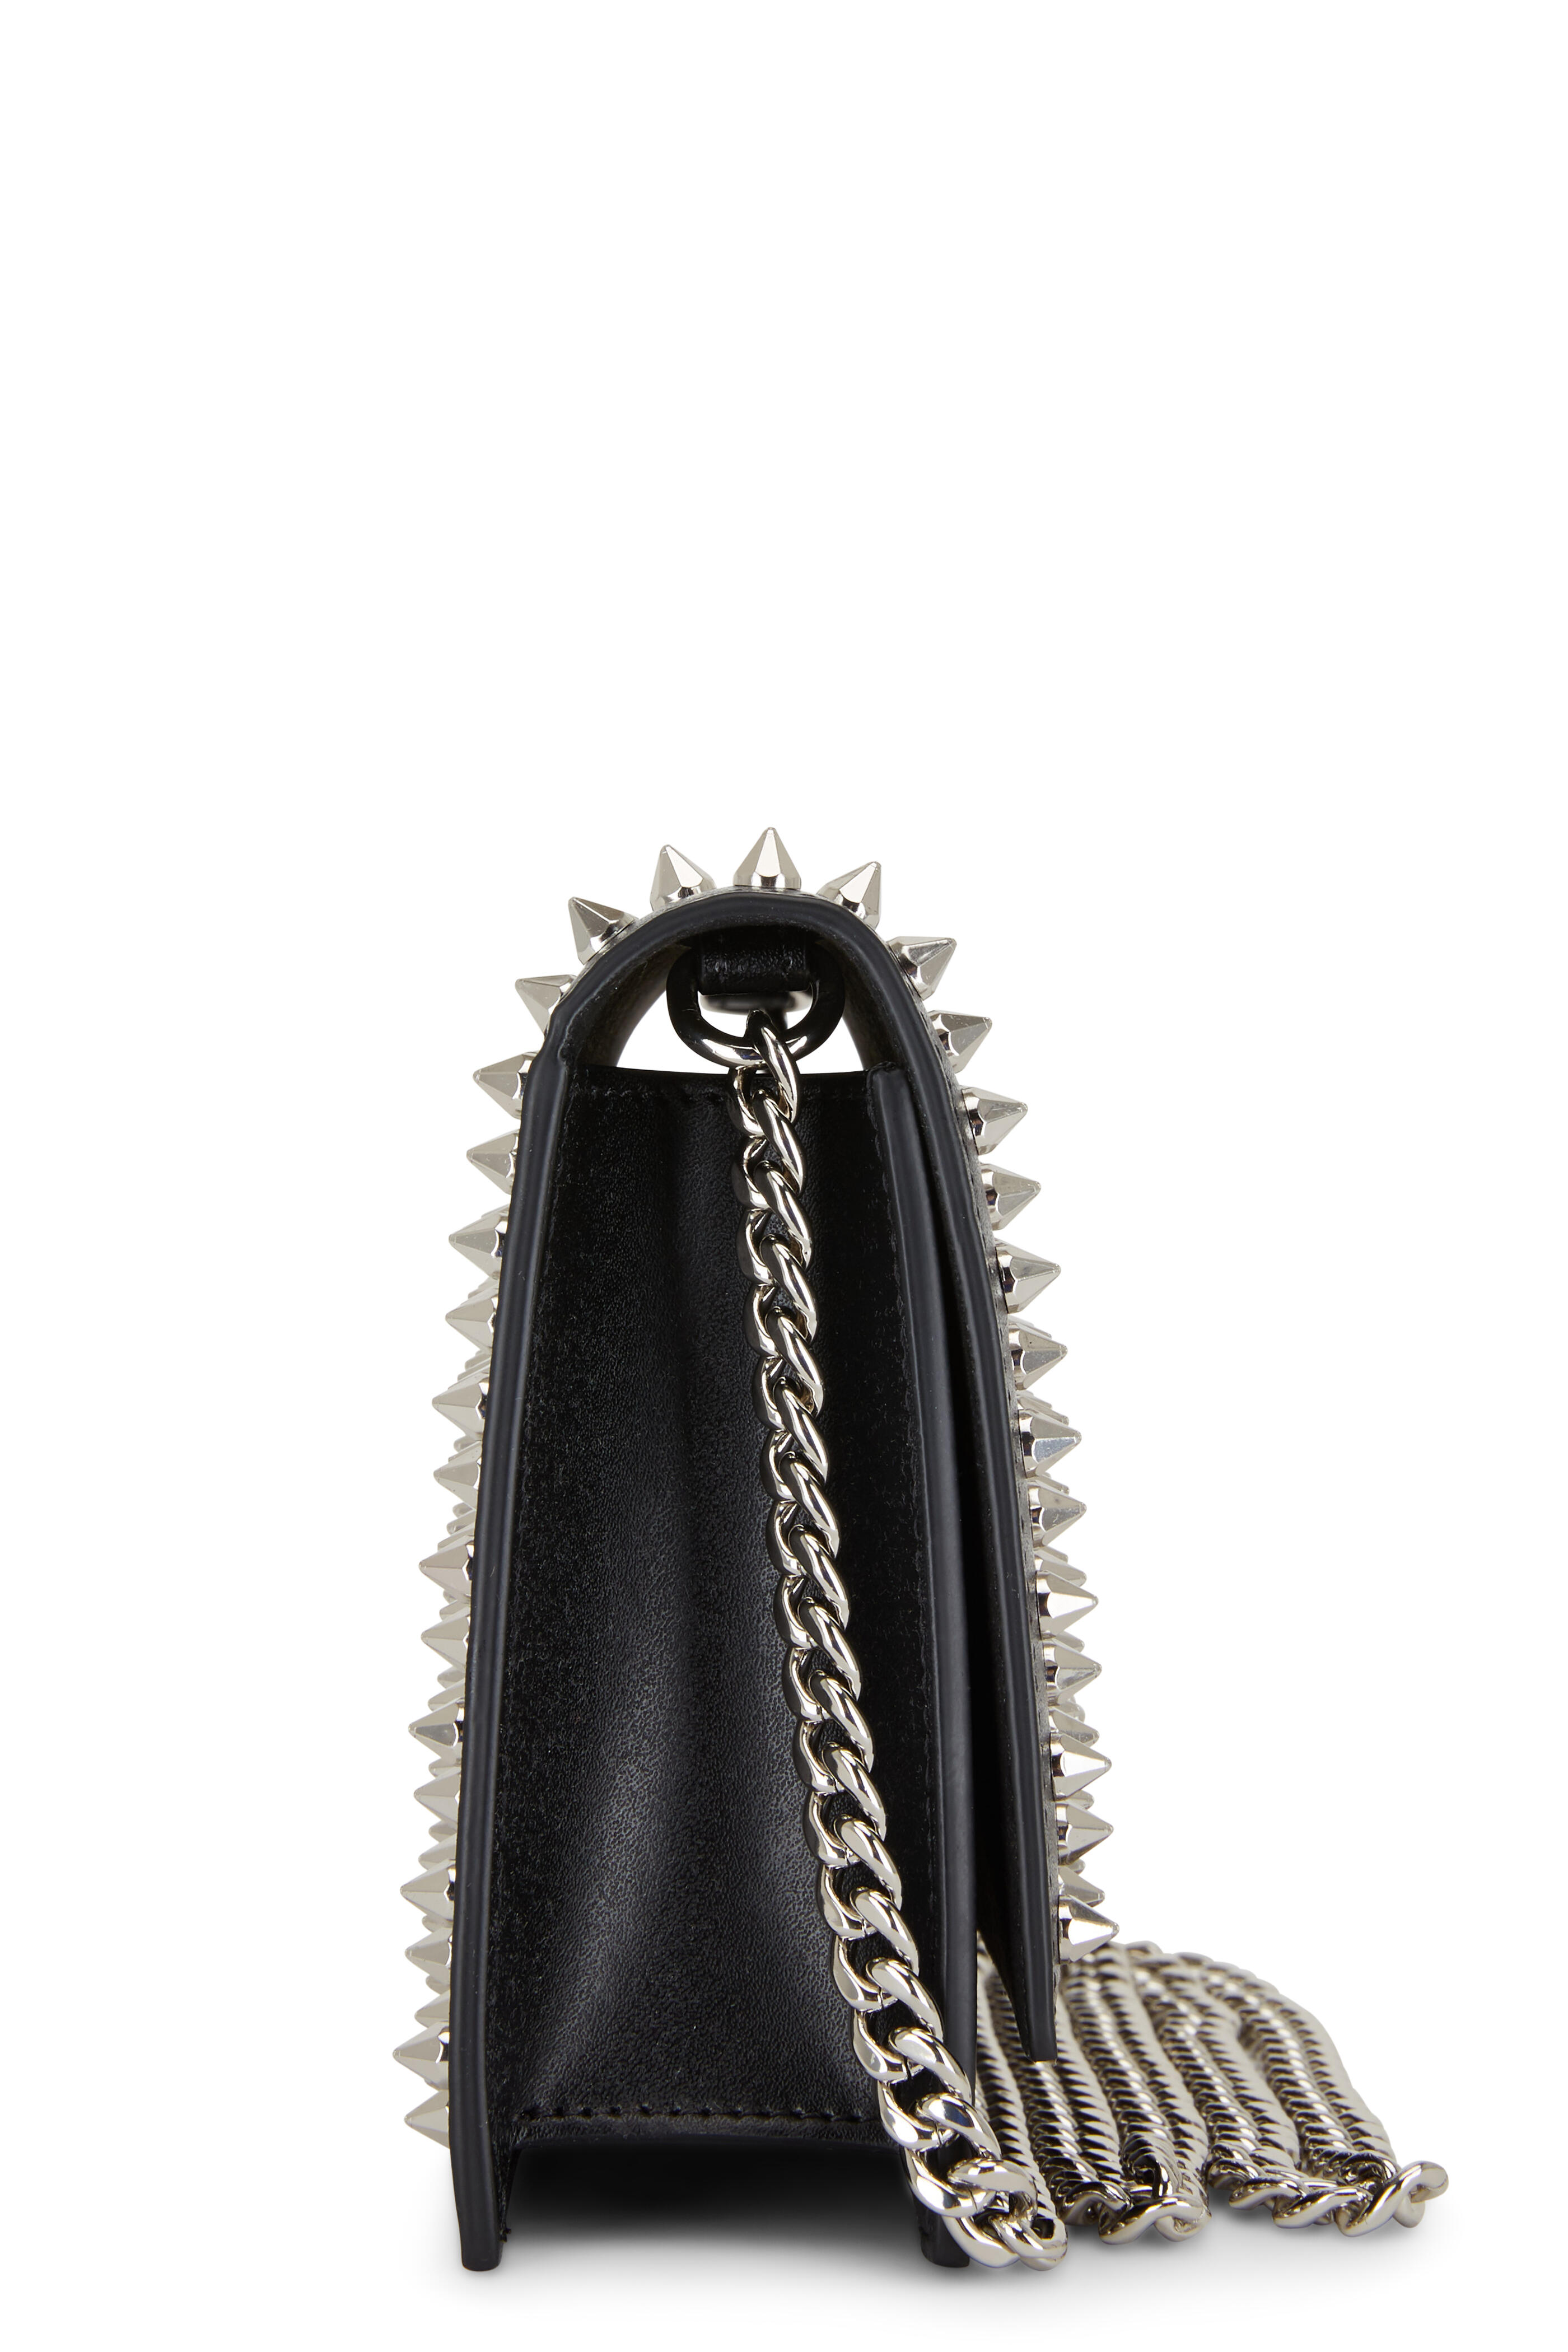 Alexander McQueen Mini Studded Leather Satchel Bag